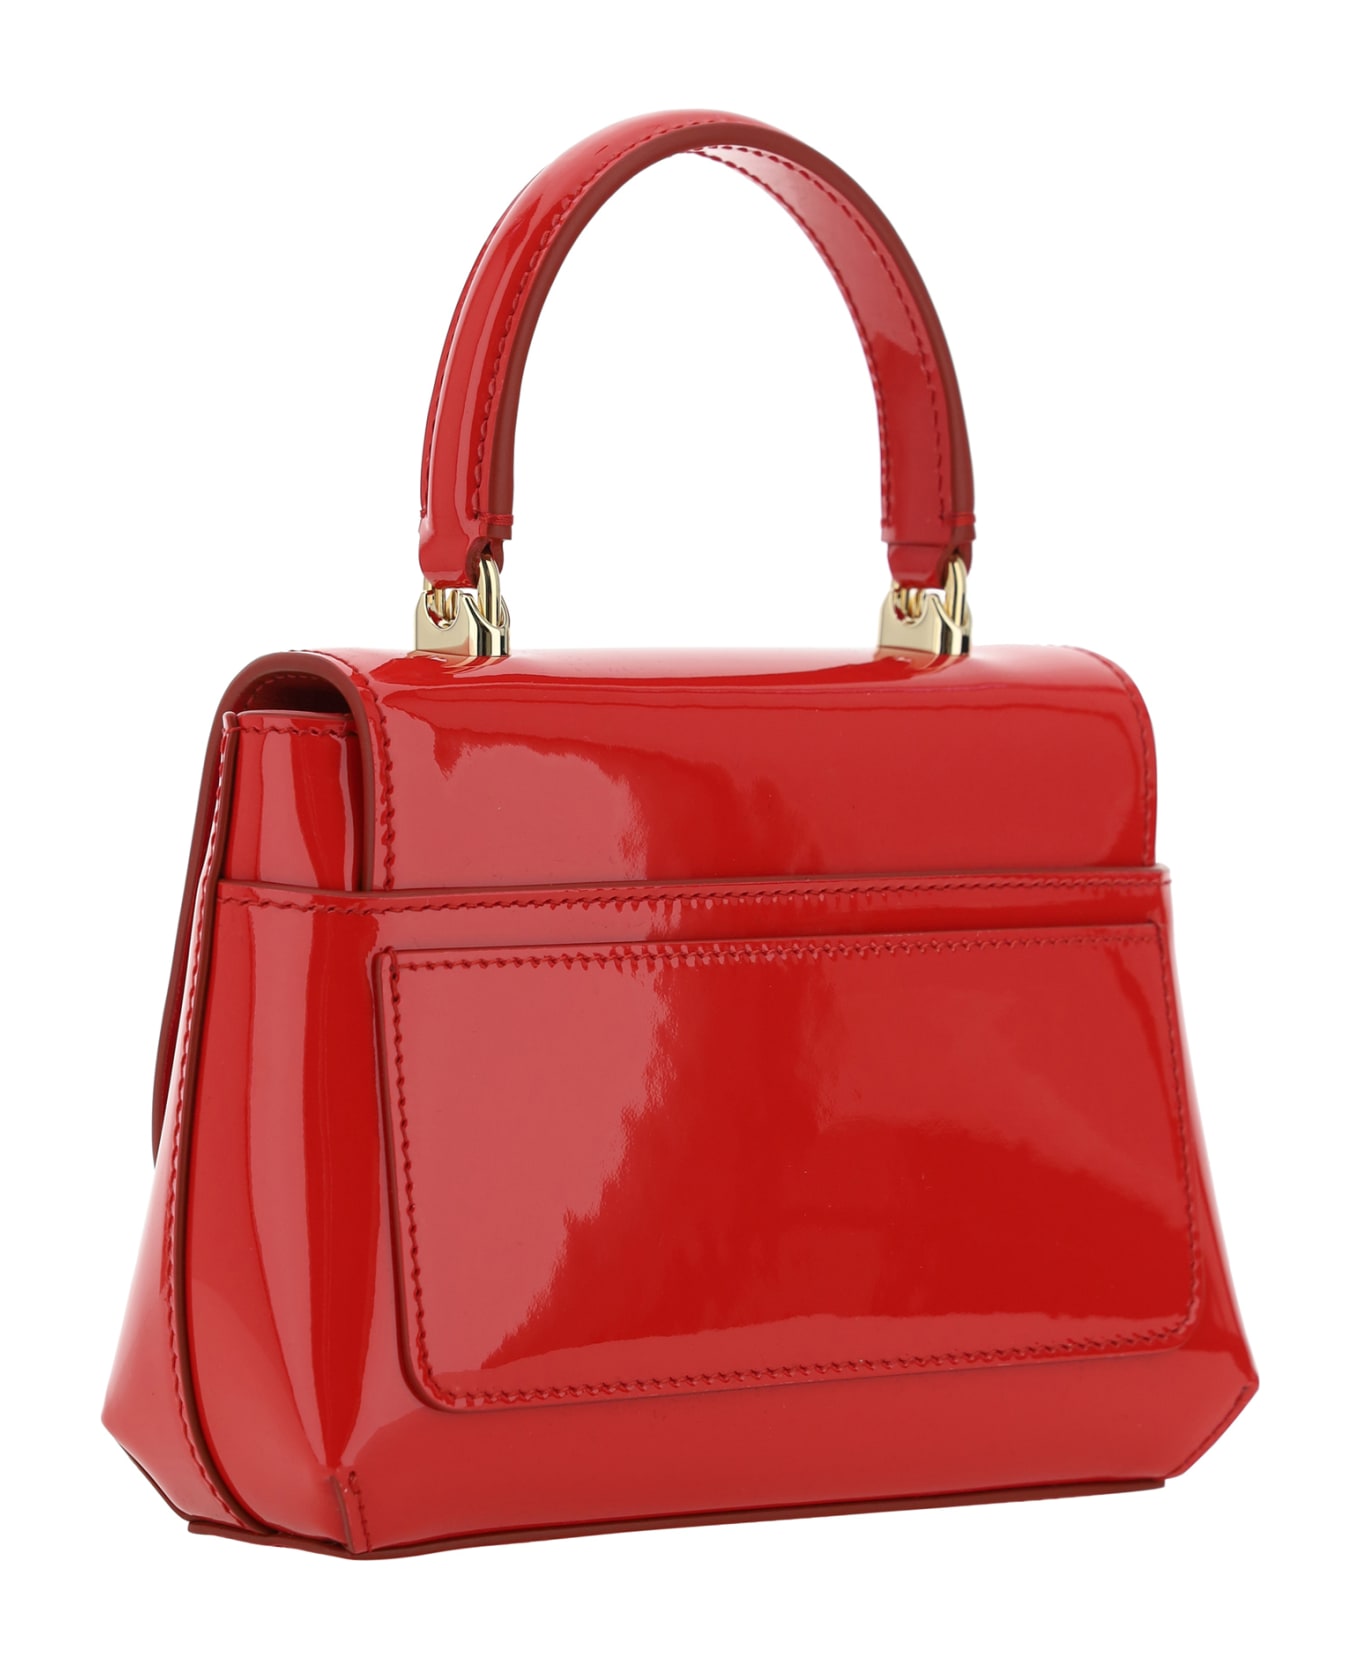 Dolce & Gabbana 'dg' Handbag - Rosso 2